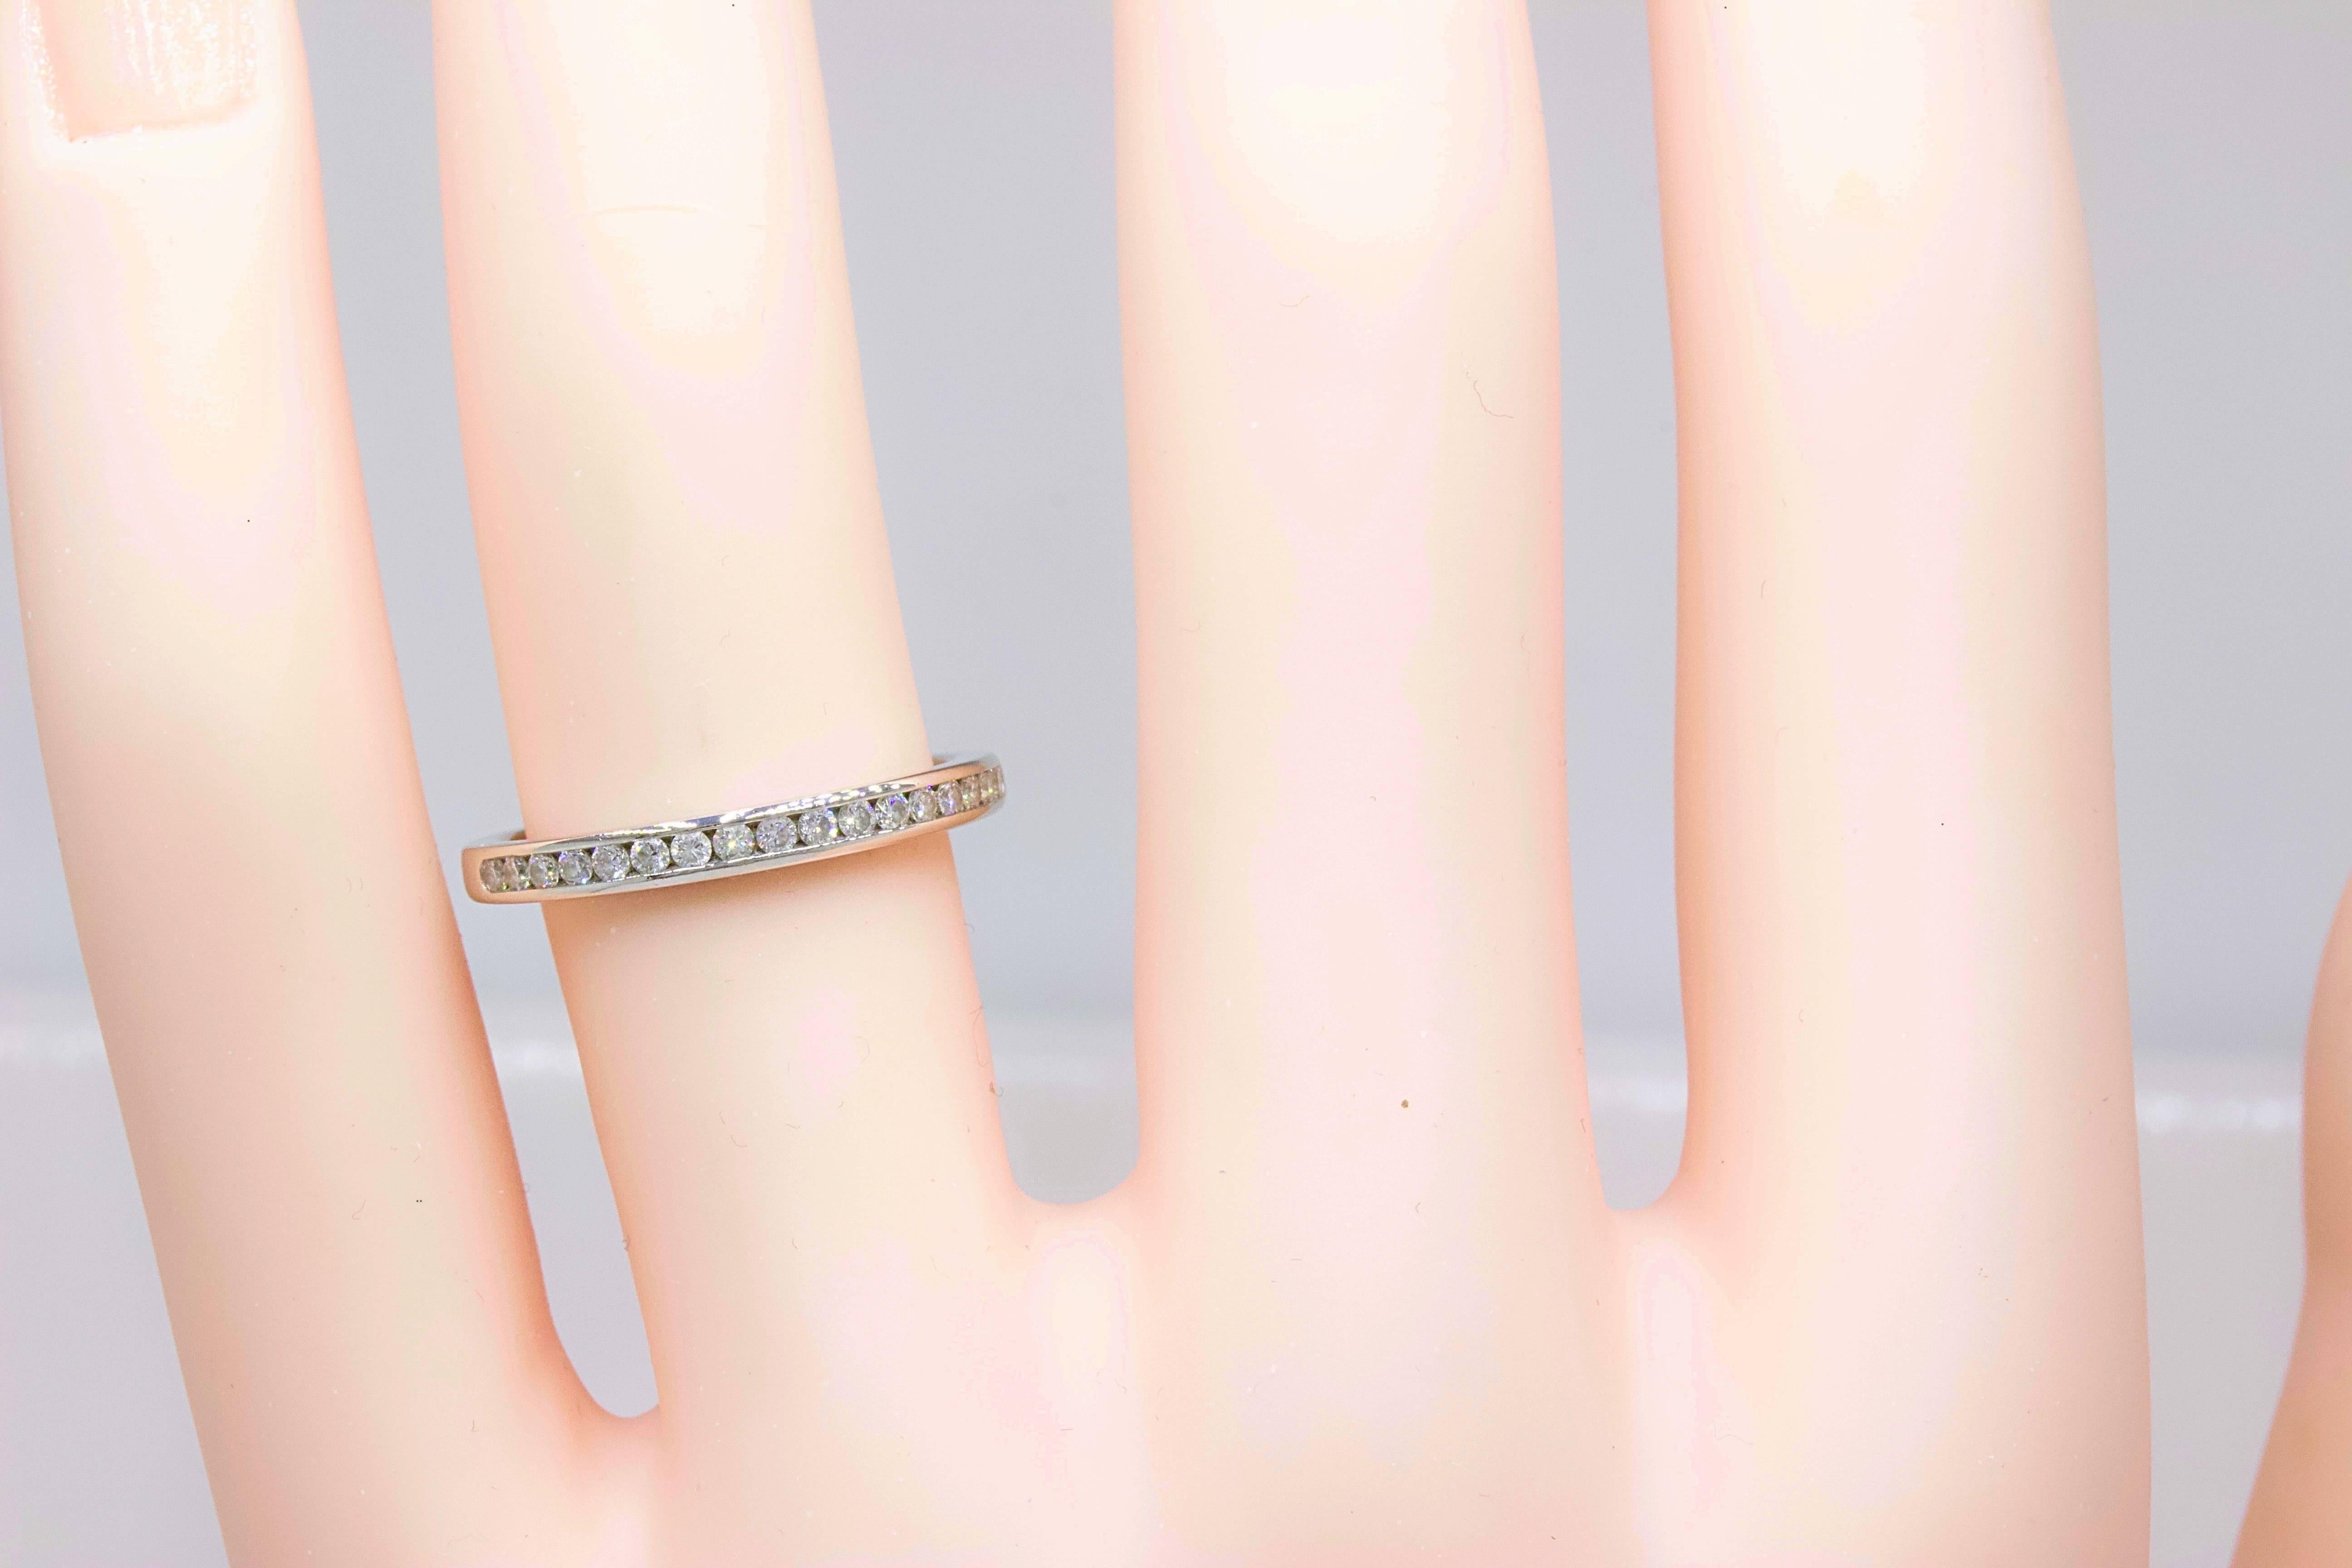 Tiffany & Co.
Style: Half Circle Diamond Wedding Band
Sku Number:  16183334
Size:  6- sizable
Metal:  Platinum PT950
Total Carat Weight:  0.22 Cts.
Diamond Shape:  Round Brilliant 
Diamond Color & Clarity:  G / VS
Hallmark:  